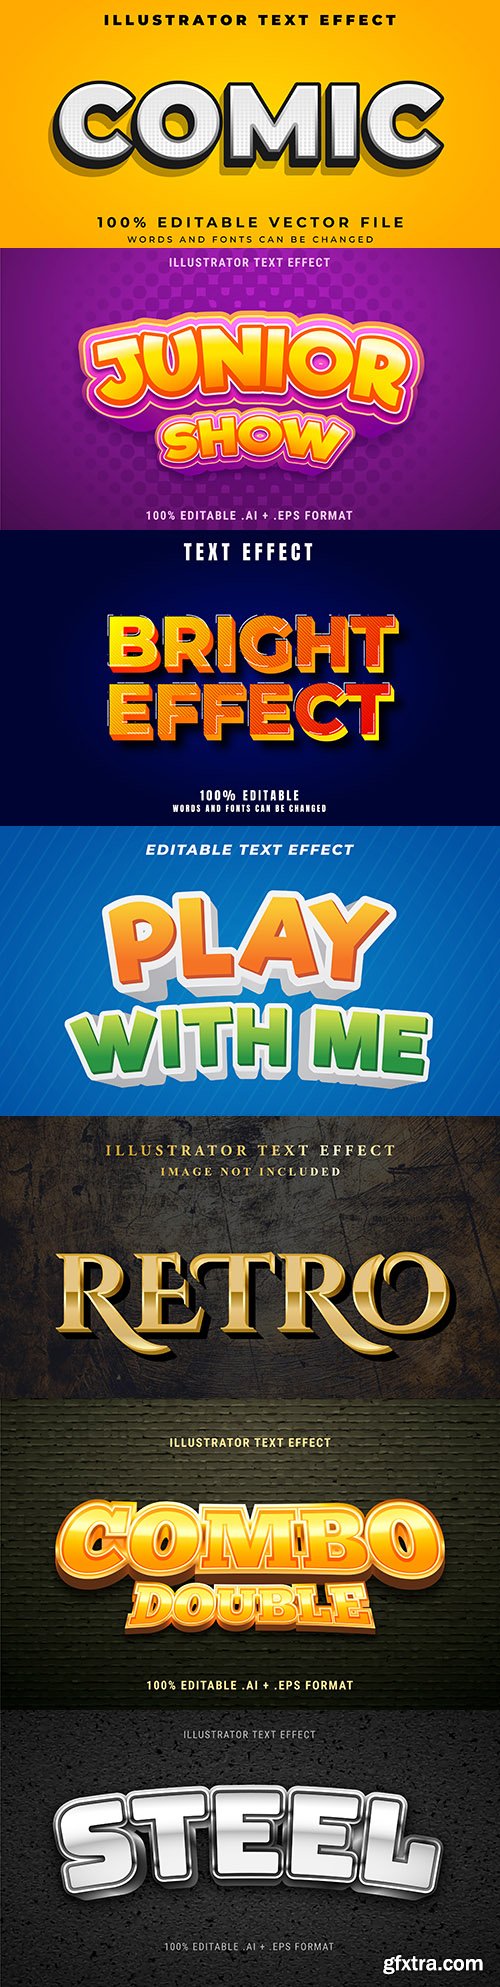 Editable font effect text collection illustration design 67